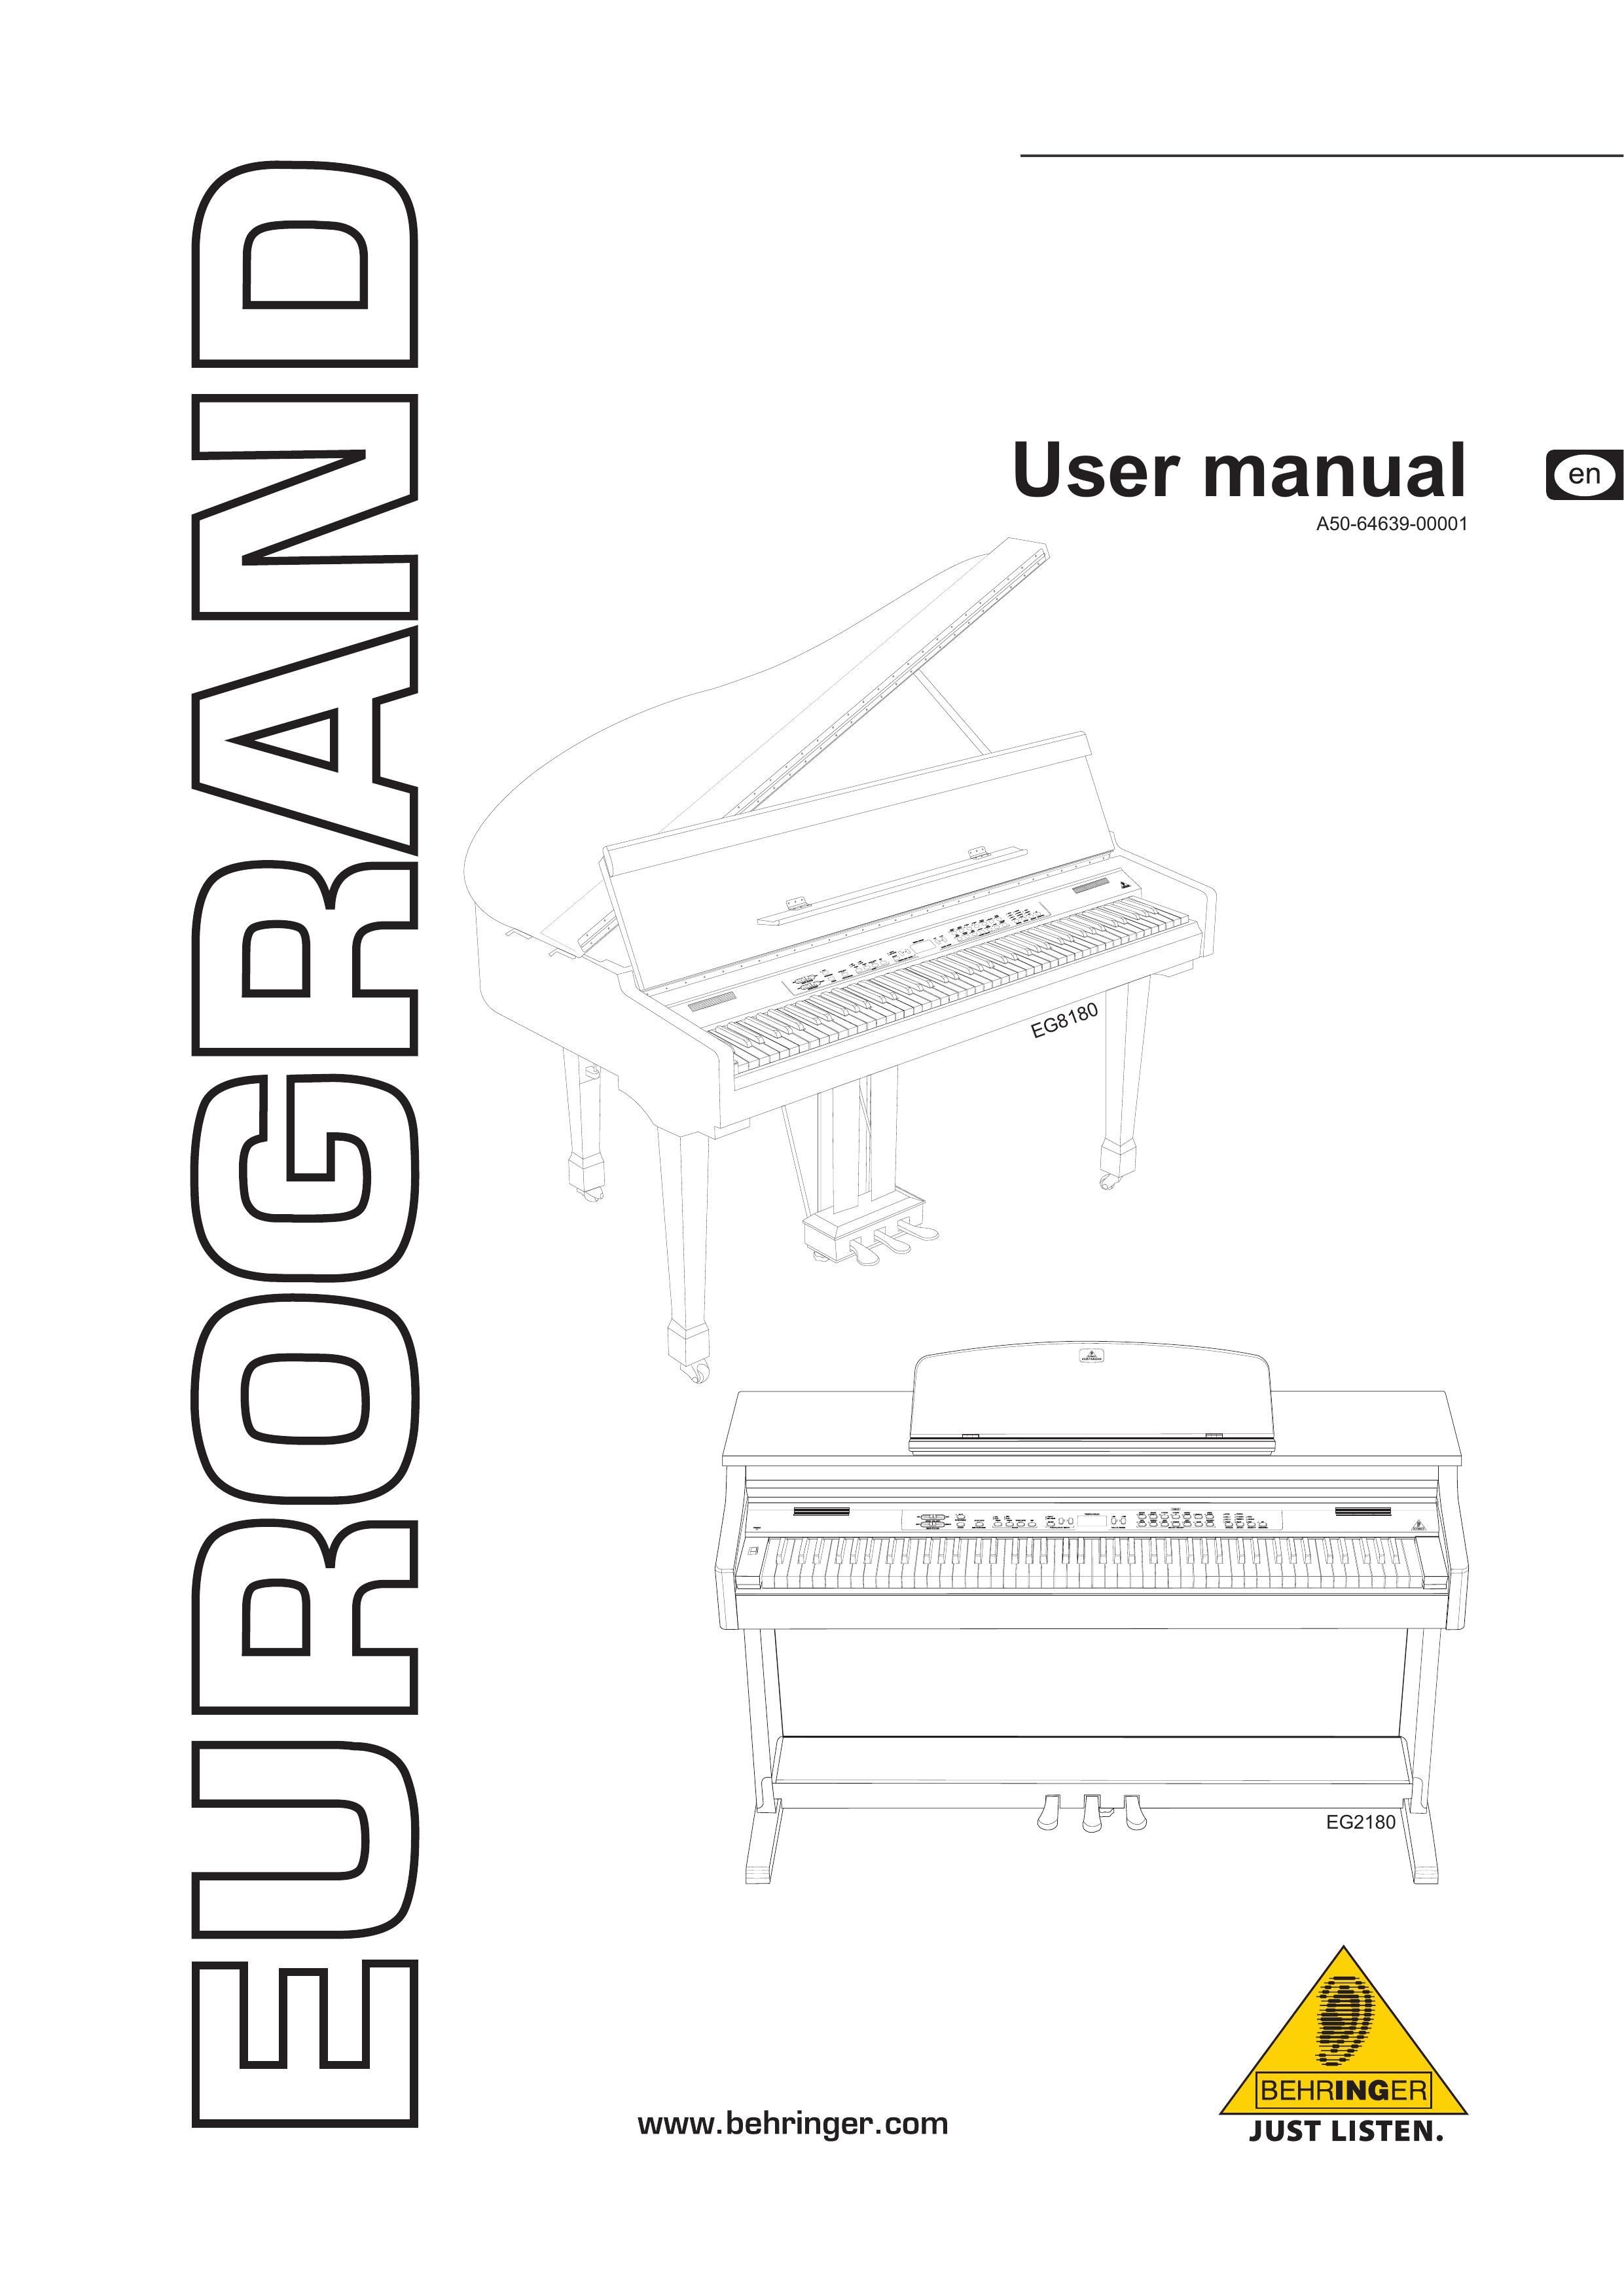 Behringer EG8180 Musical Instrument User Manual